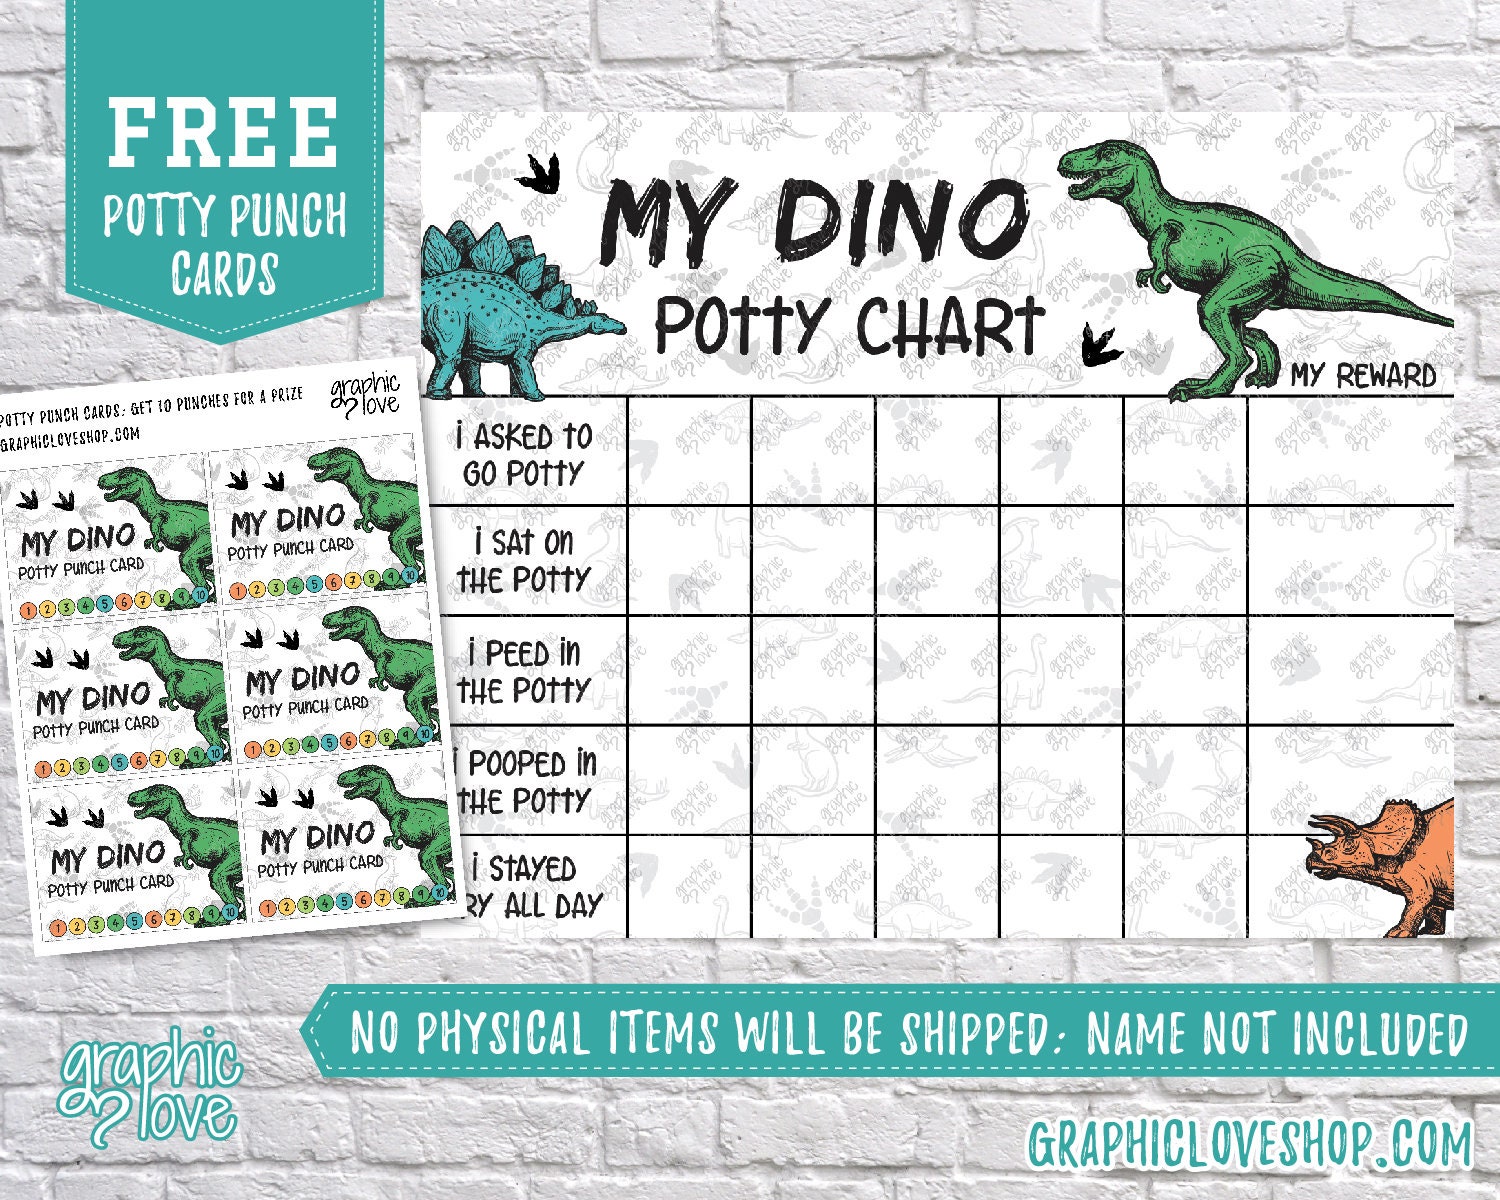 Dinosaur Reward Chart Free Printable